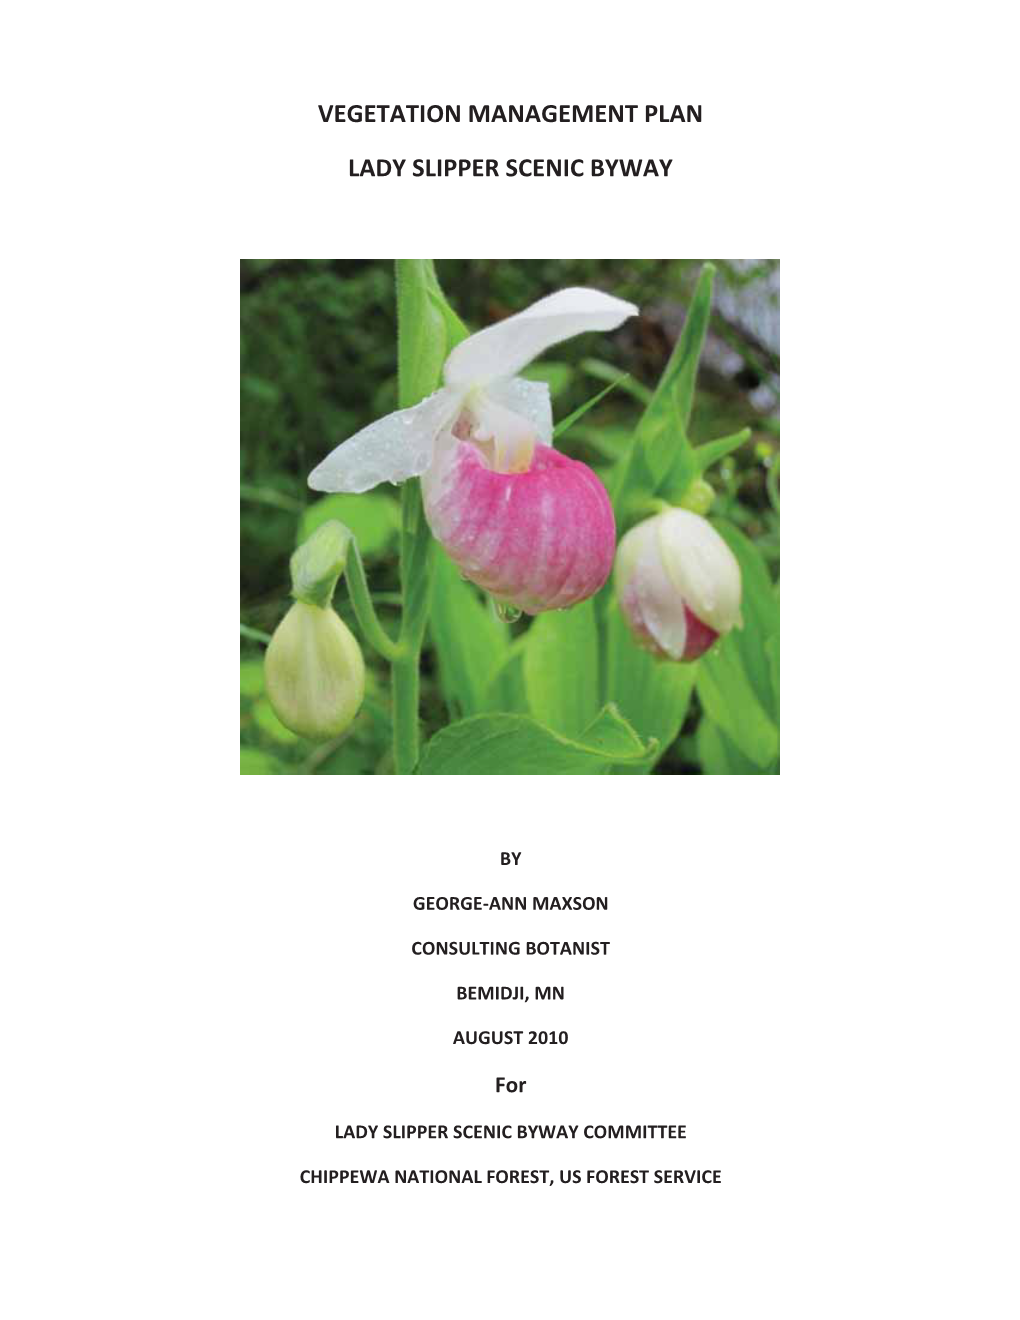 Vegetation Management Plan Lady Slipper Scenic Byway